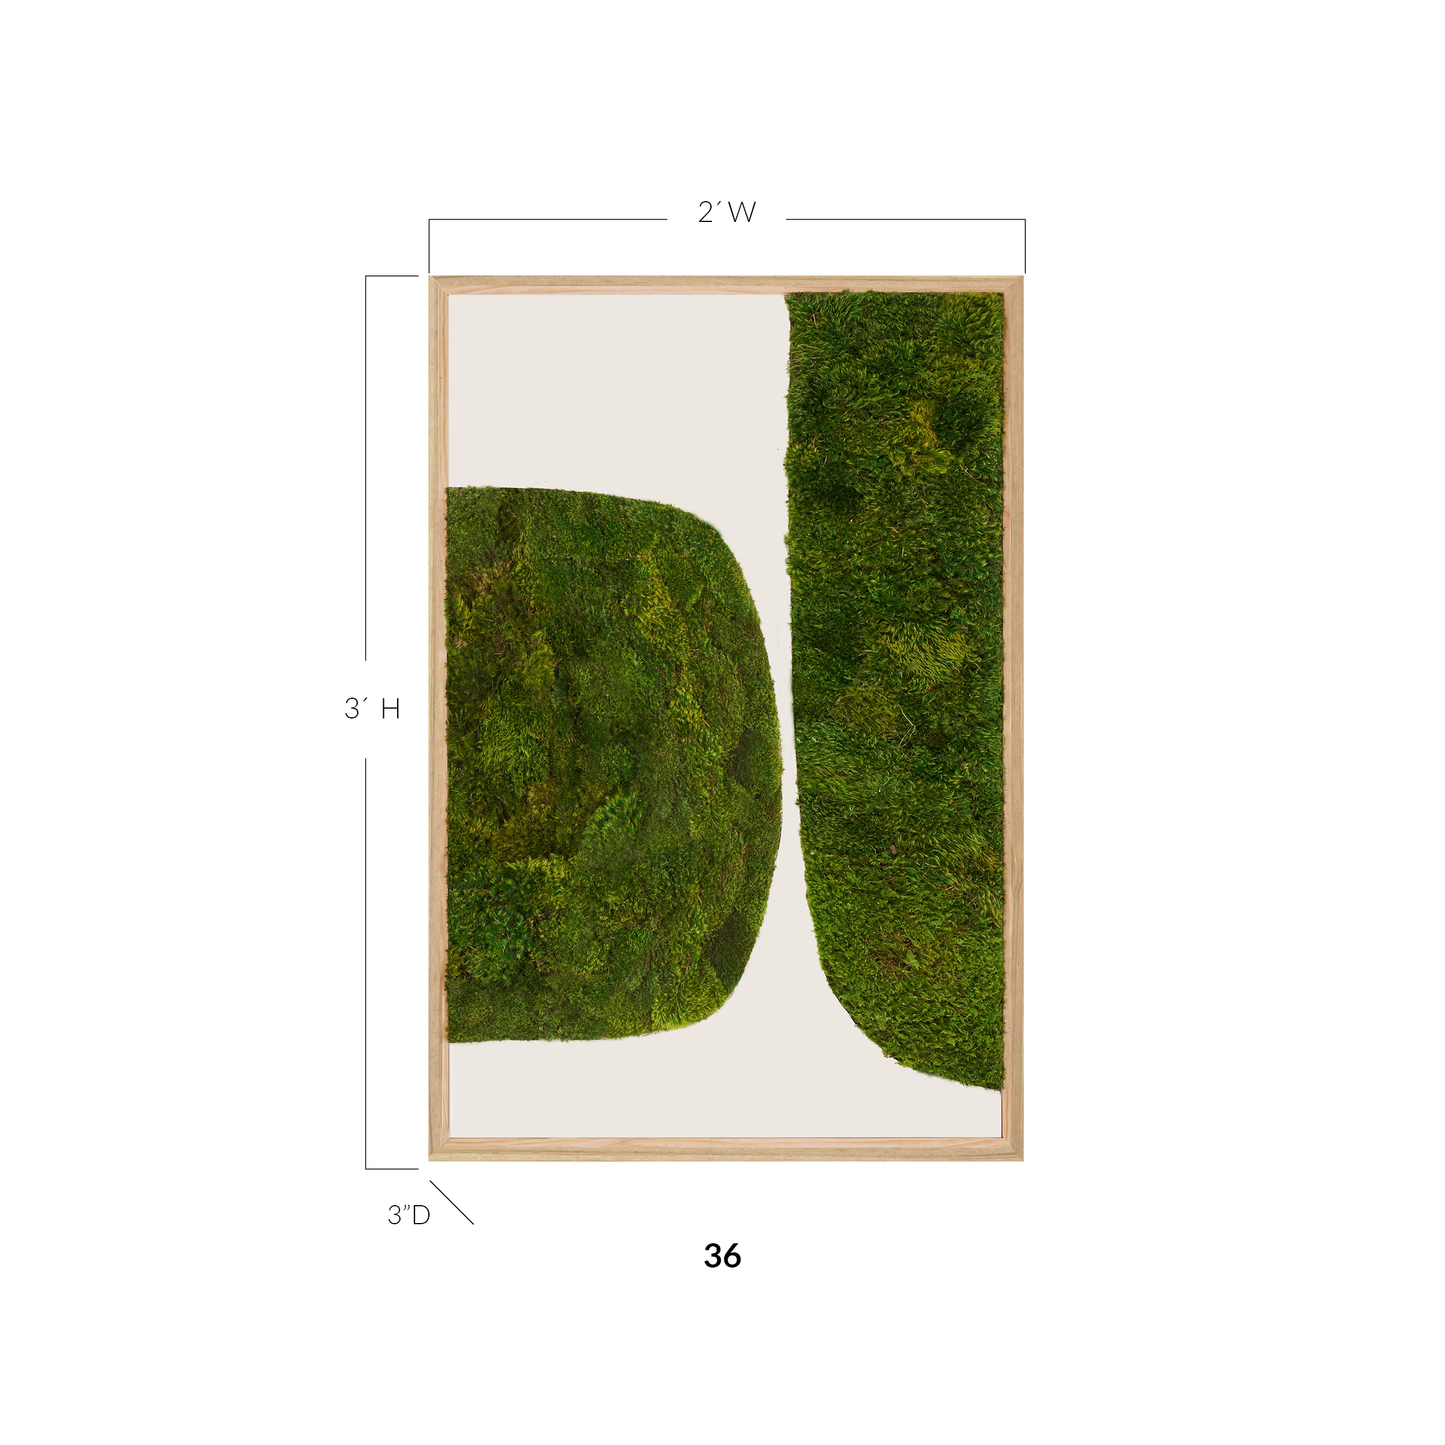 Moss Art - Abstract Series No. 045 (3' x 2')